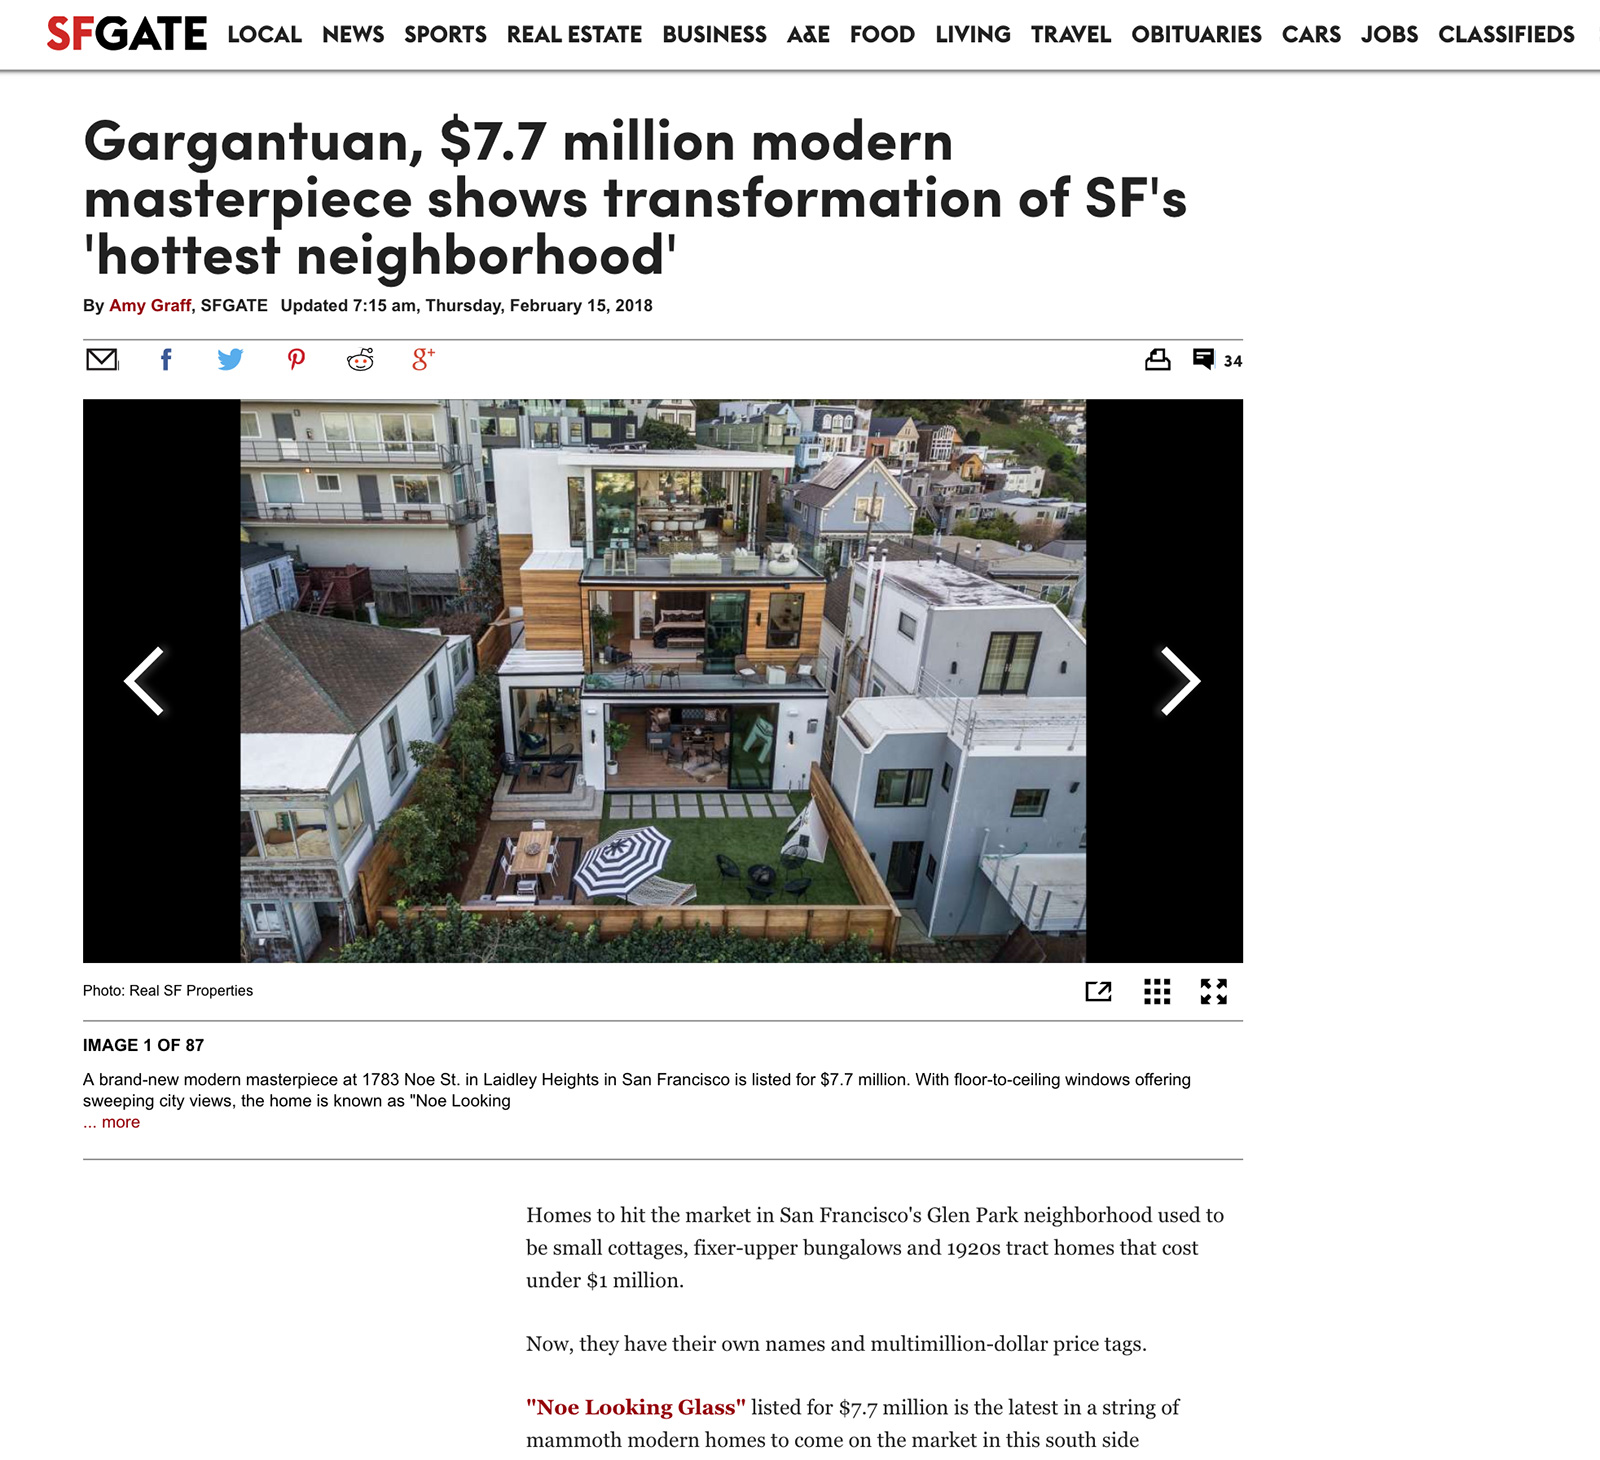 Gargantuan, $7.7 million modern masterpiece shows transformation of SF’s ‘hottest neighborhood’